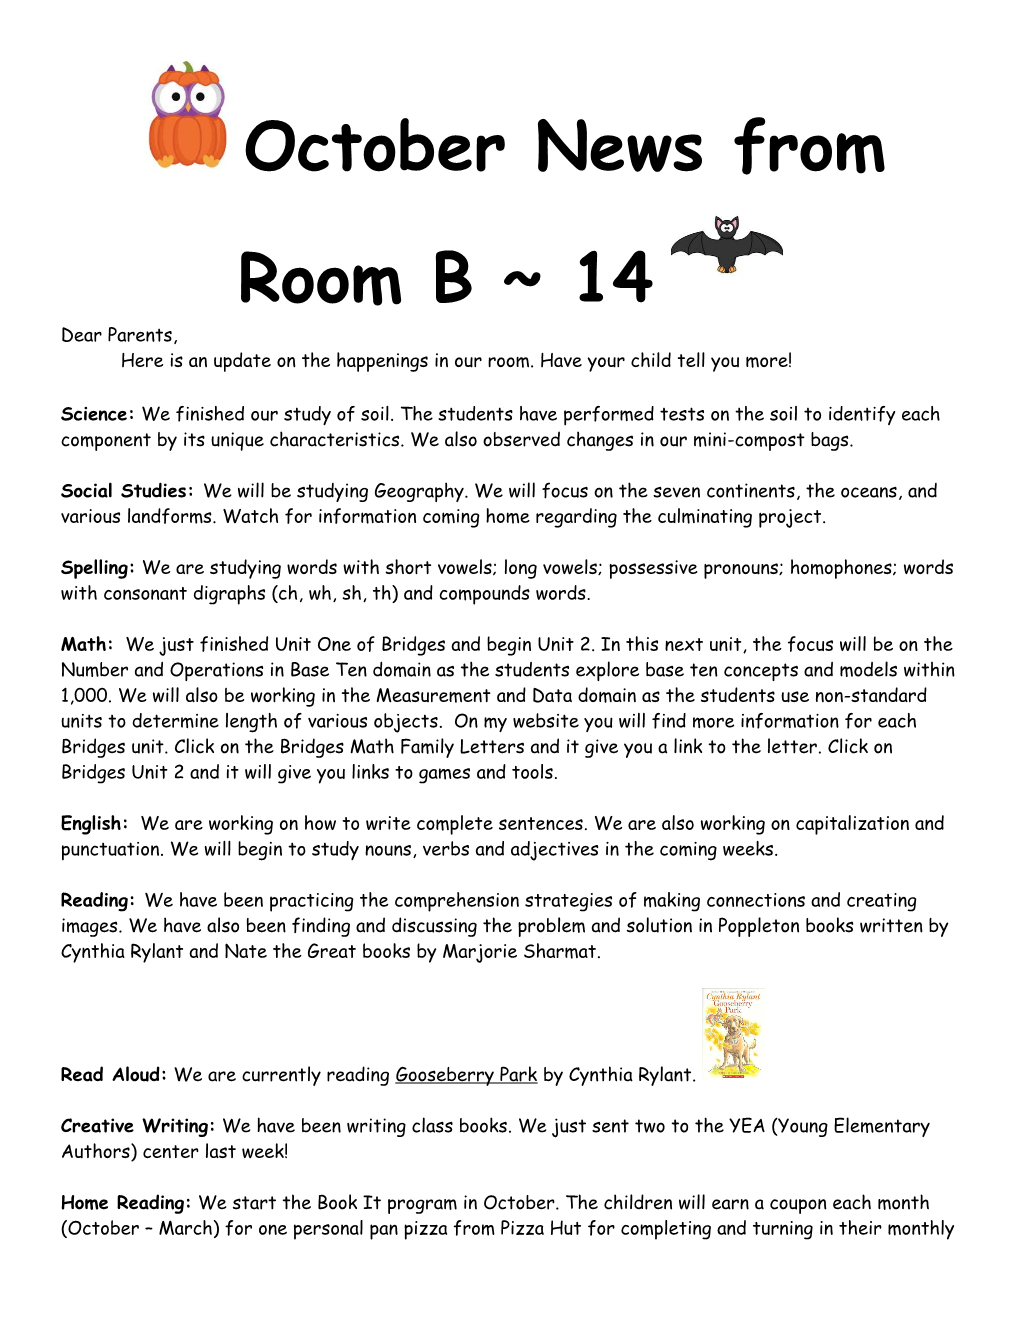 October News from Room 6